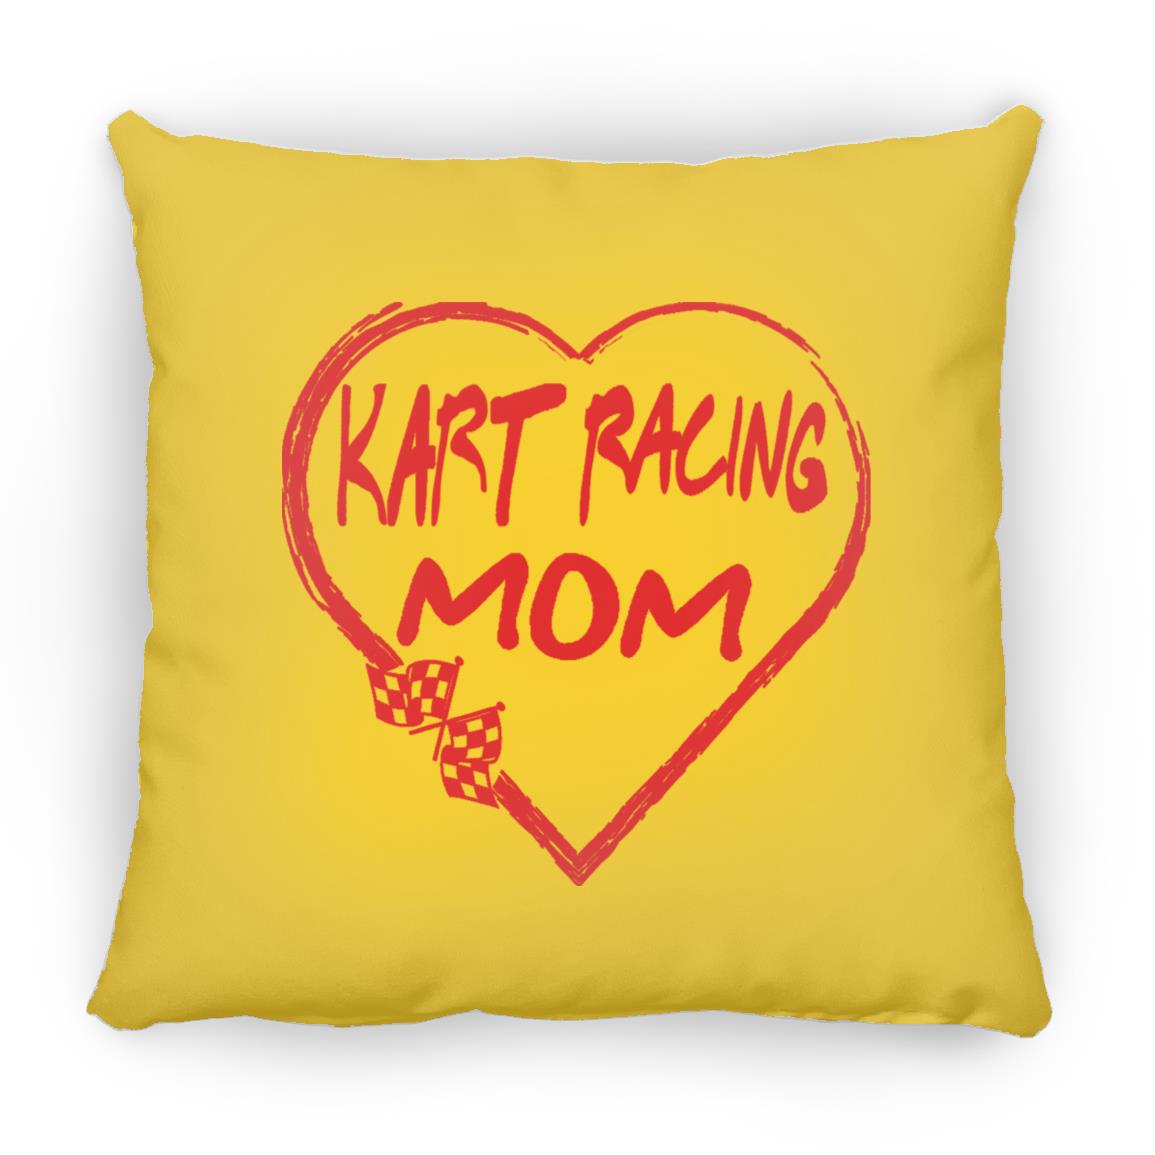 Kart Racing Mom Heart Small Square Pillow